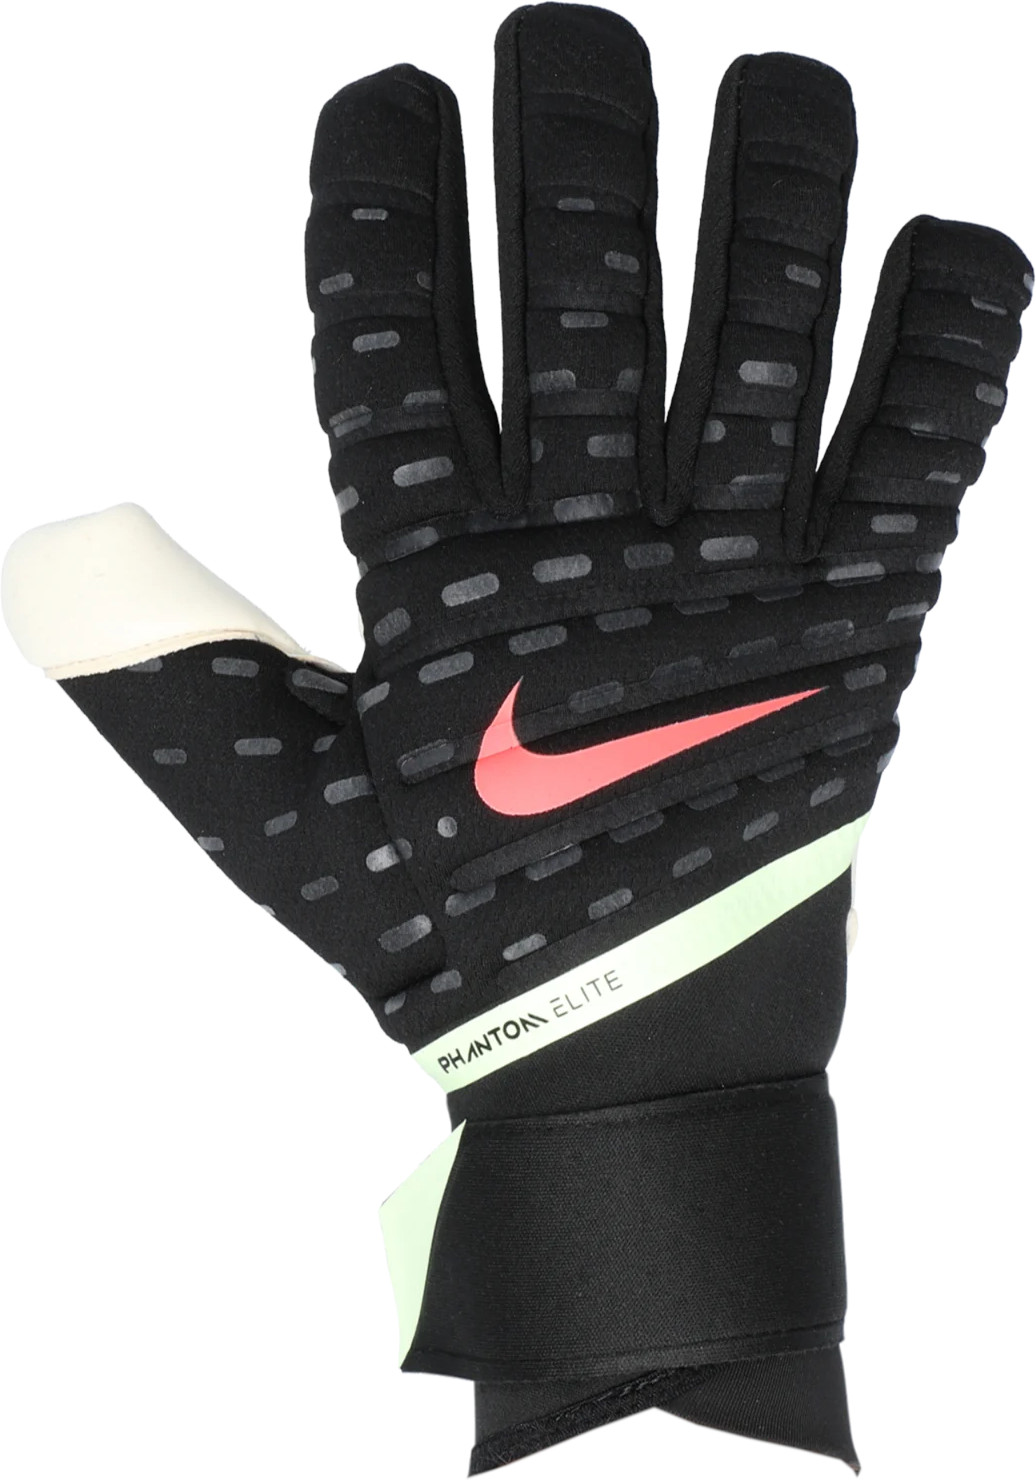 Keepers handschoenen Nike Phantom Elite Promo